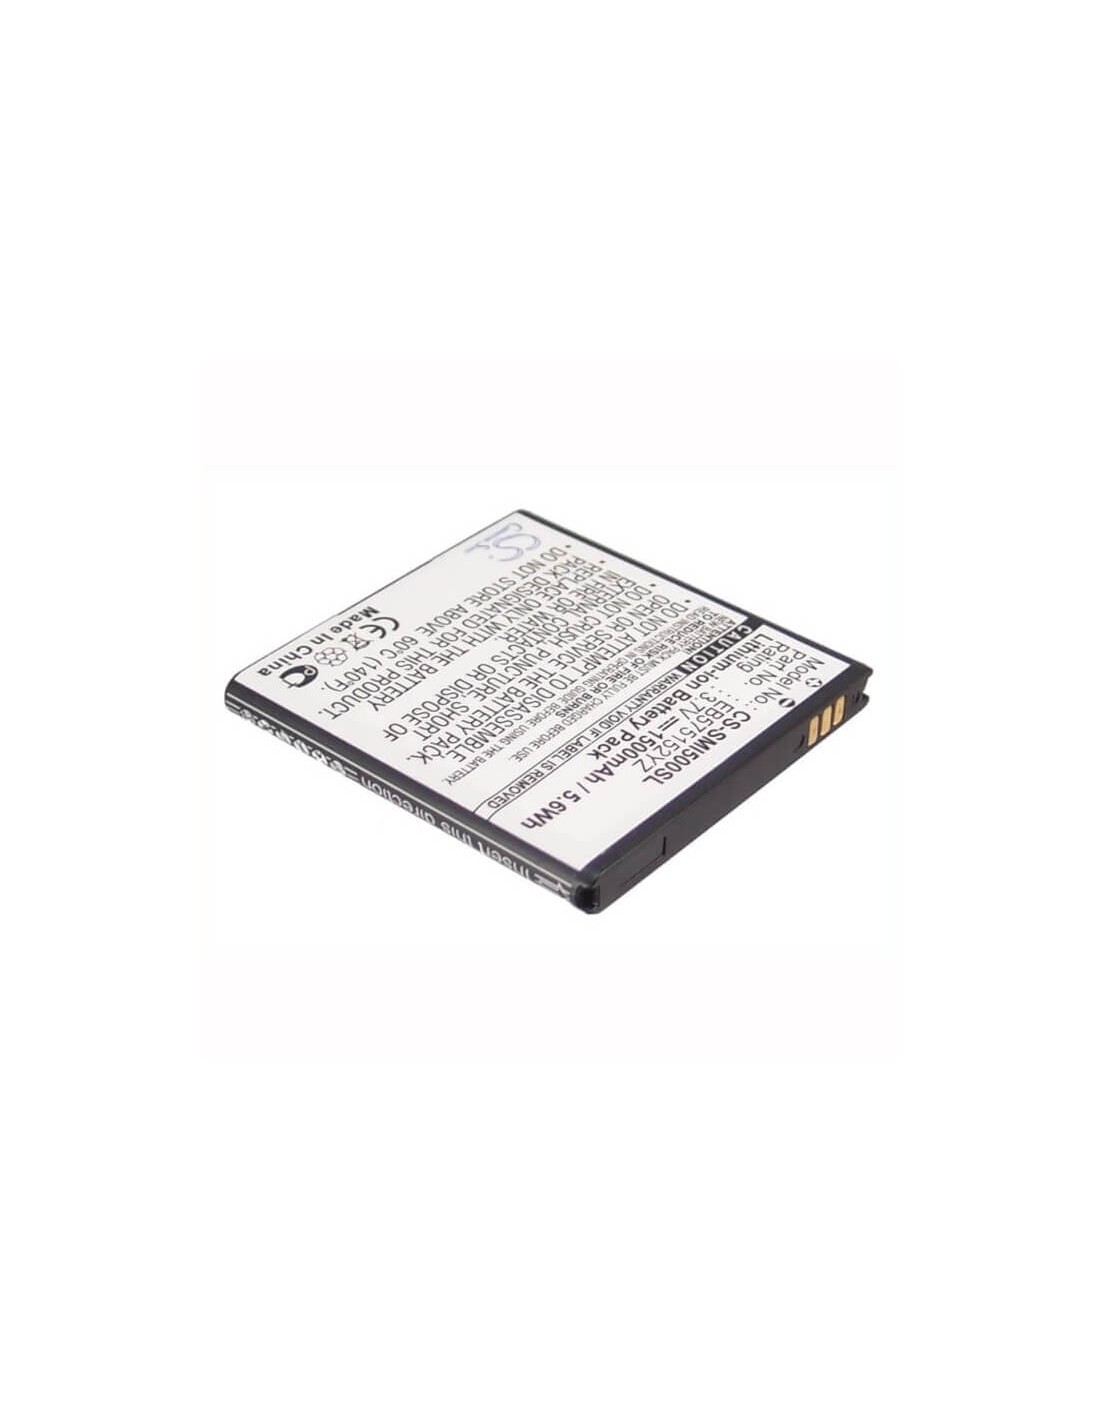 Battery for Samsung SCH-i500 3.7V, 1500mAh - 5.55Wh